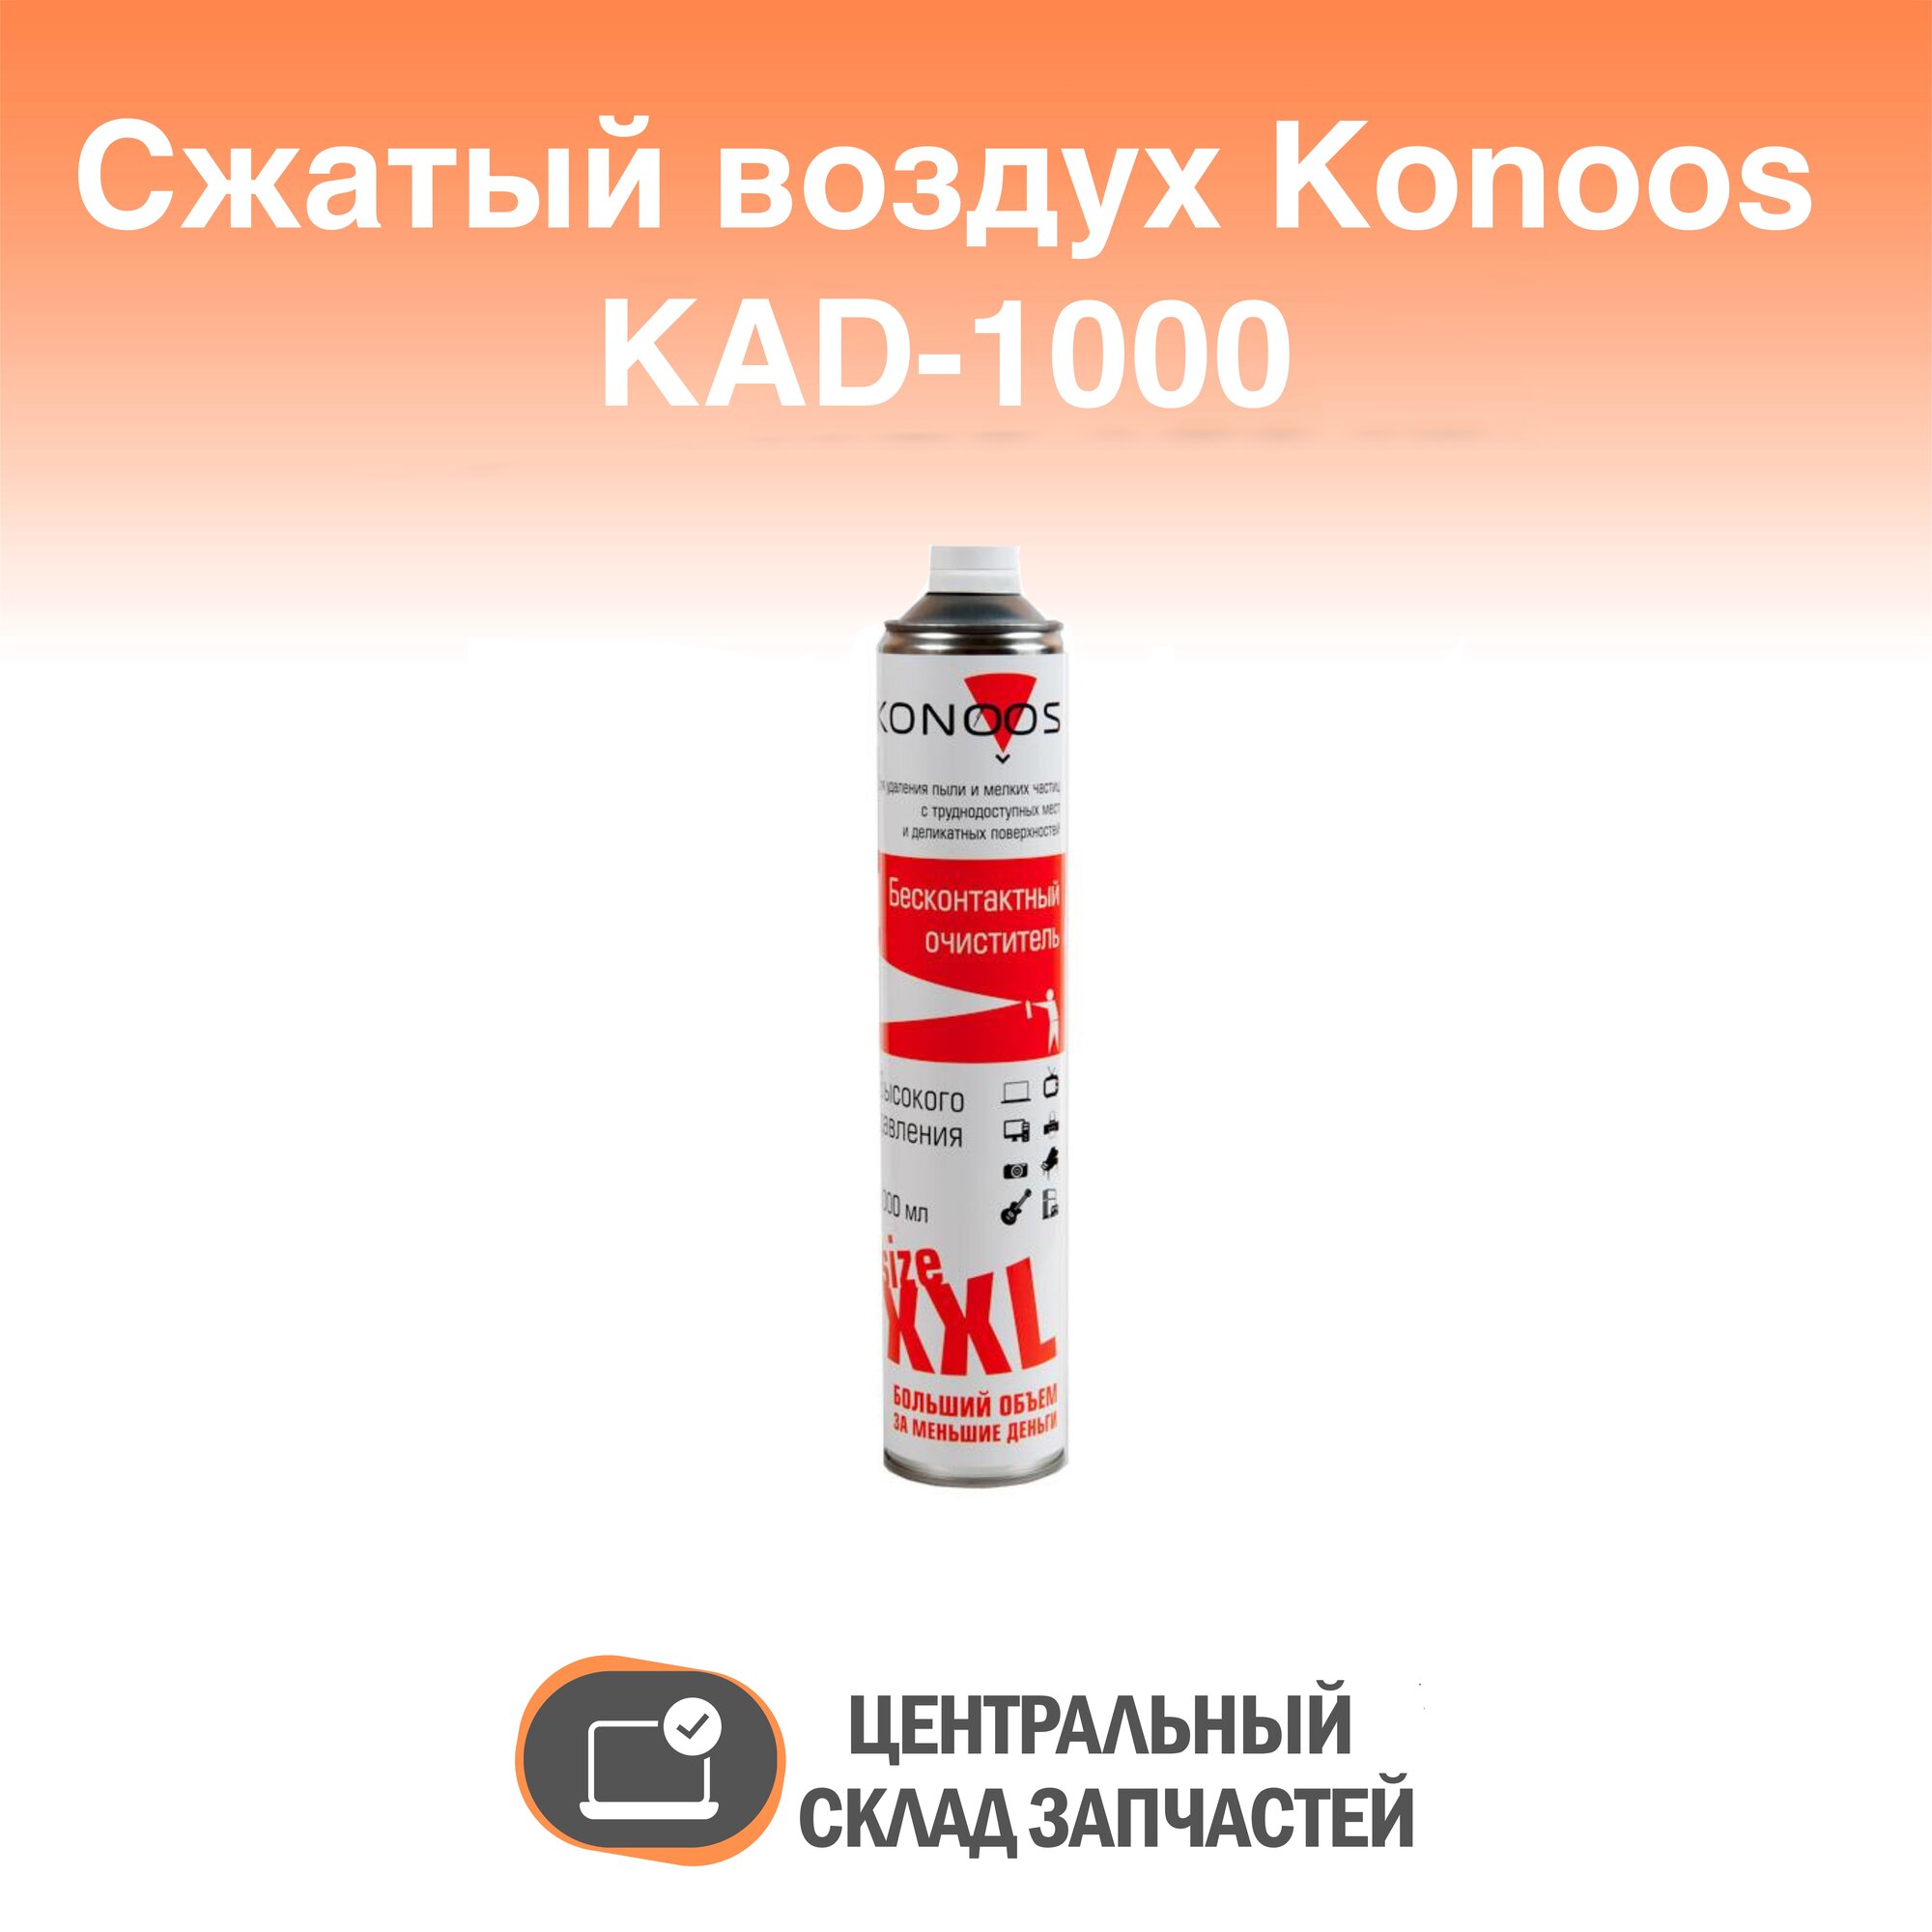 KONOOS Сжатый воздух для продувки пыли Konoos KAD-1000, 1000 мл